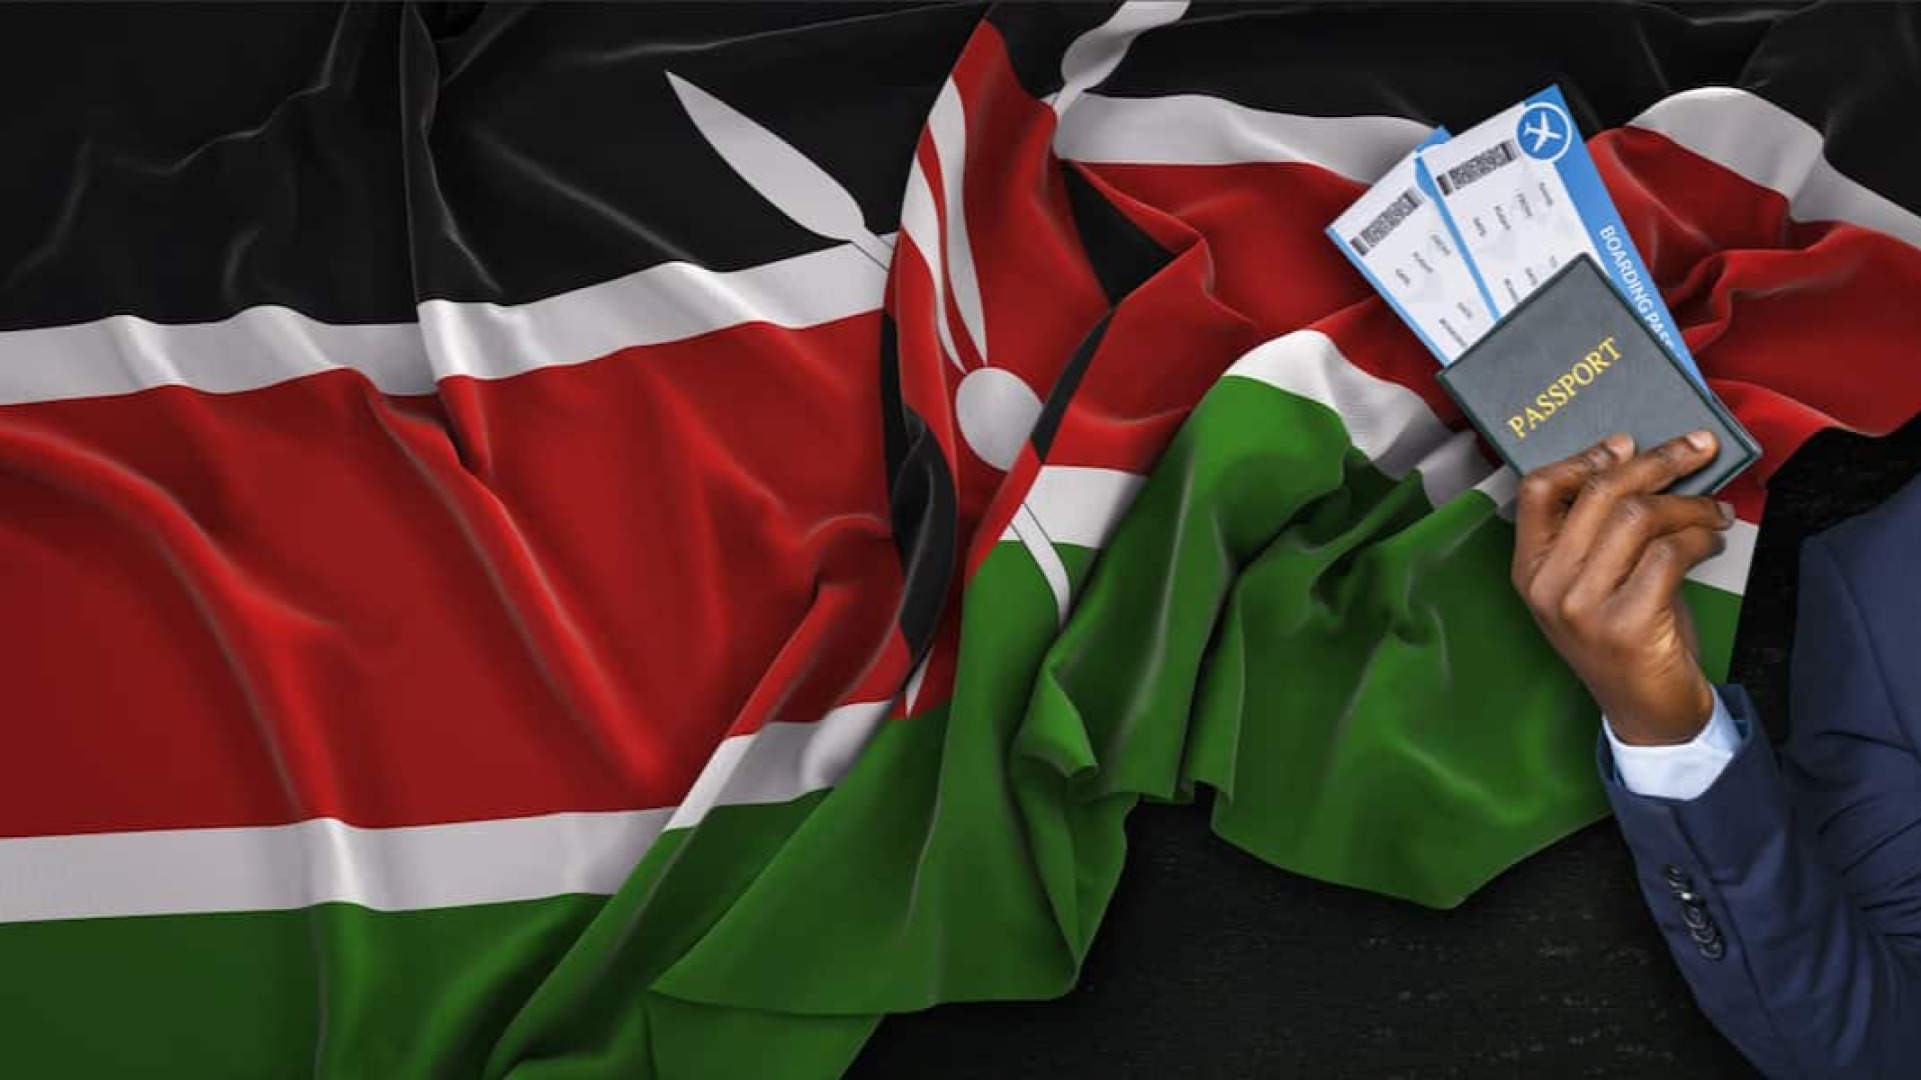 Salient Features of Kenya’s Electronic Travel Authorization (ETA)